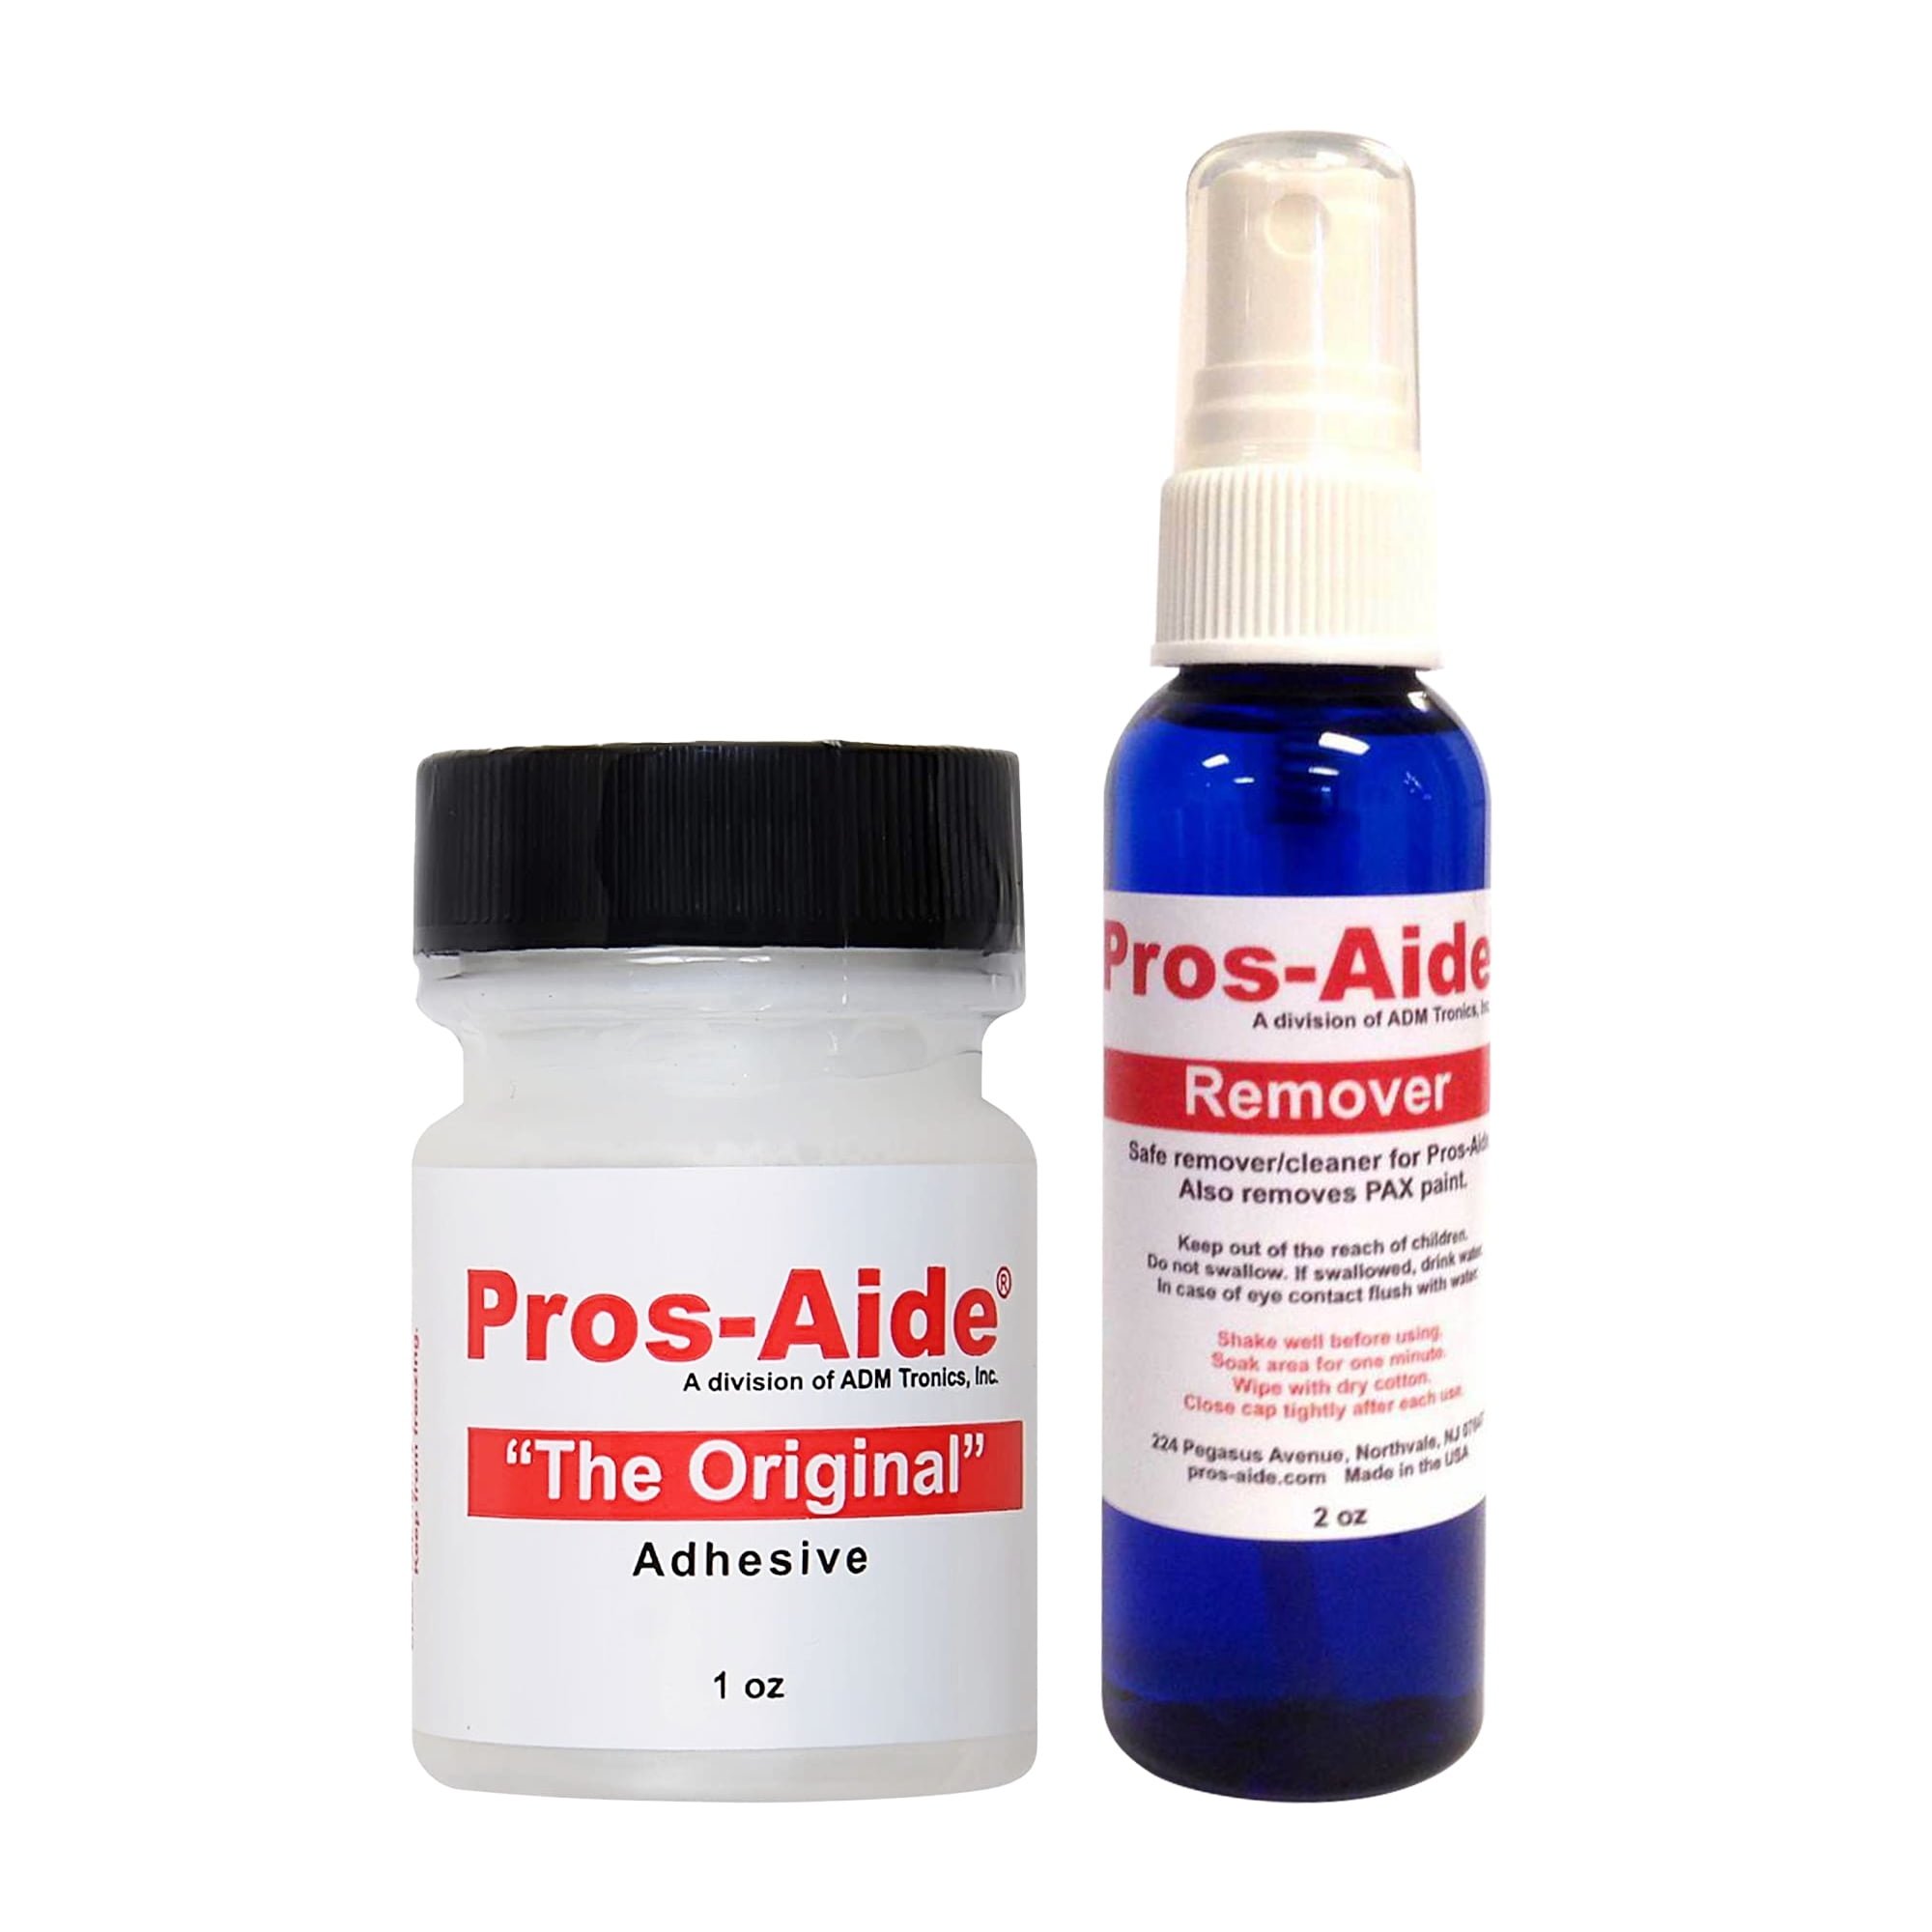 Pros-Aide Adhesive - 2oz in Leakproof Nalgene Bottle